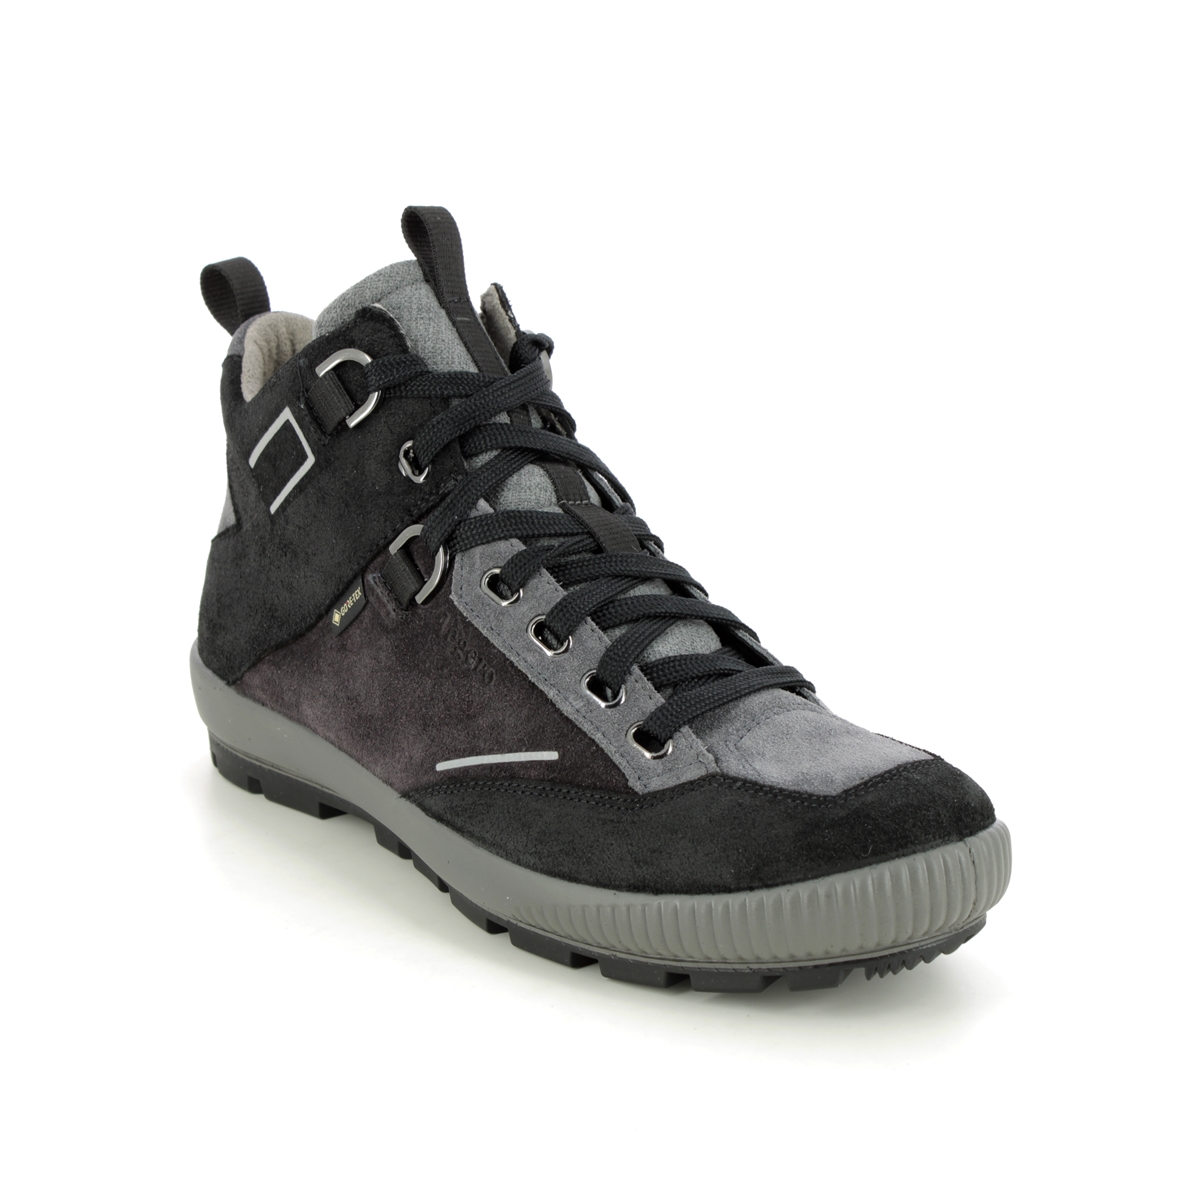 Legero Tanaro Gtx Trek Black Grey Womens Walking Boots 2000125-0000 In Size 6.5 In Plain Black Grey